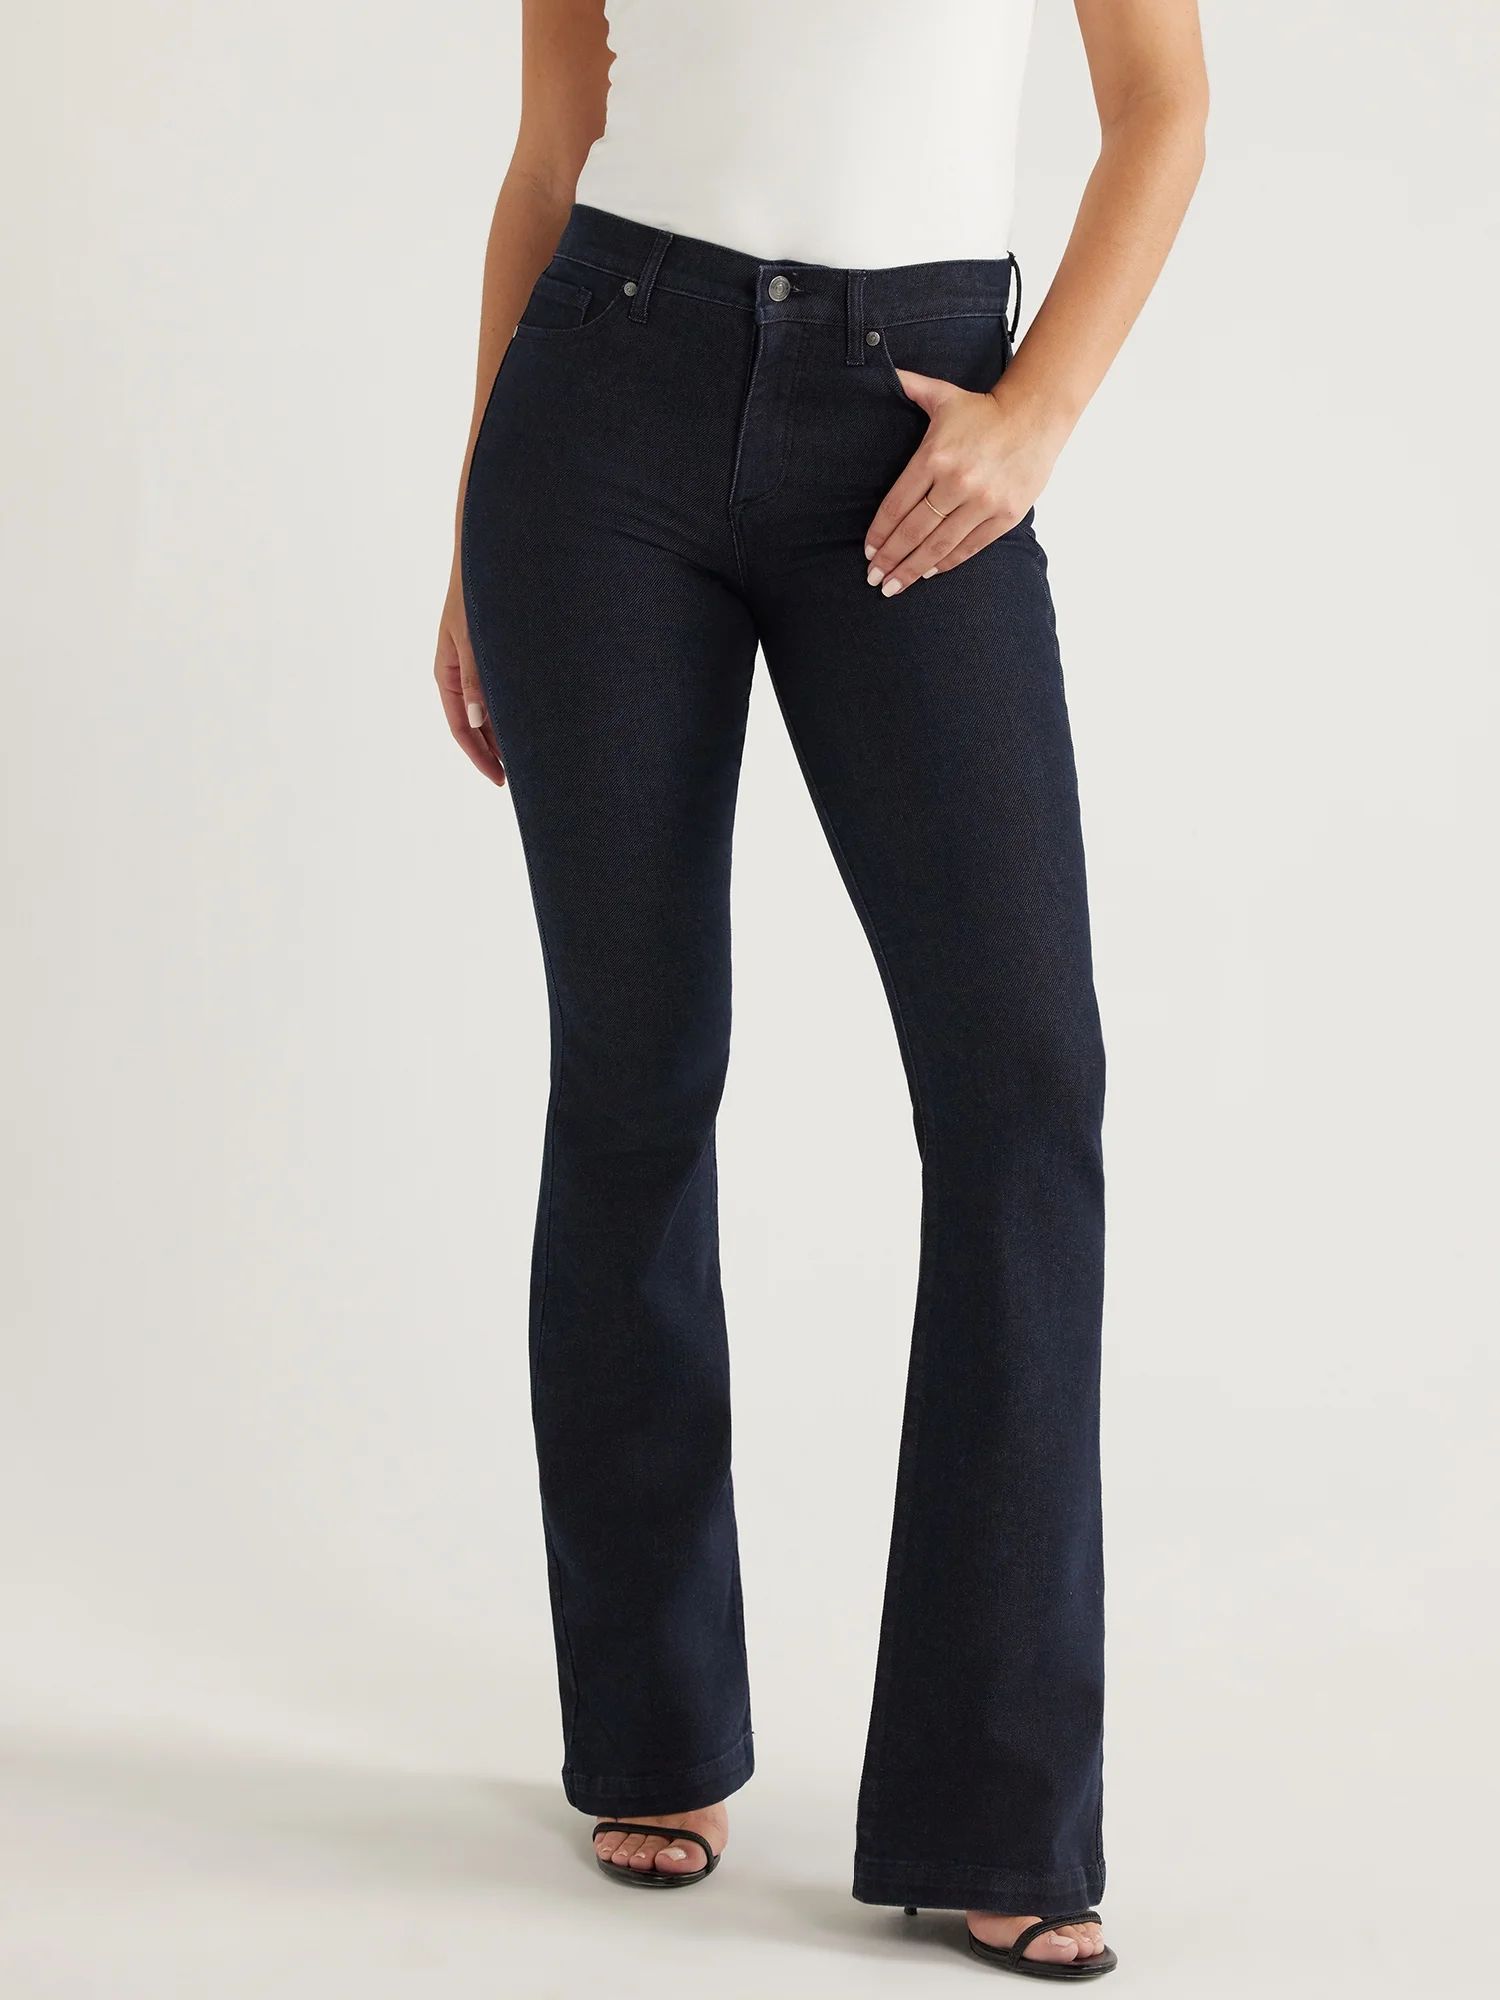 Sofia Jeans Women's Melissa Flare High Rise Jeans, 33.5" Inseam, Sizes 00-22 | Walmart (US)